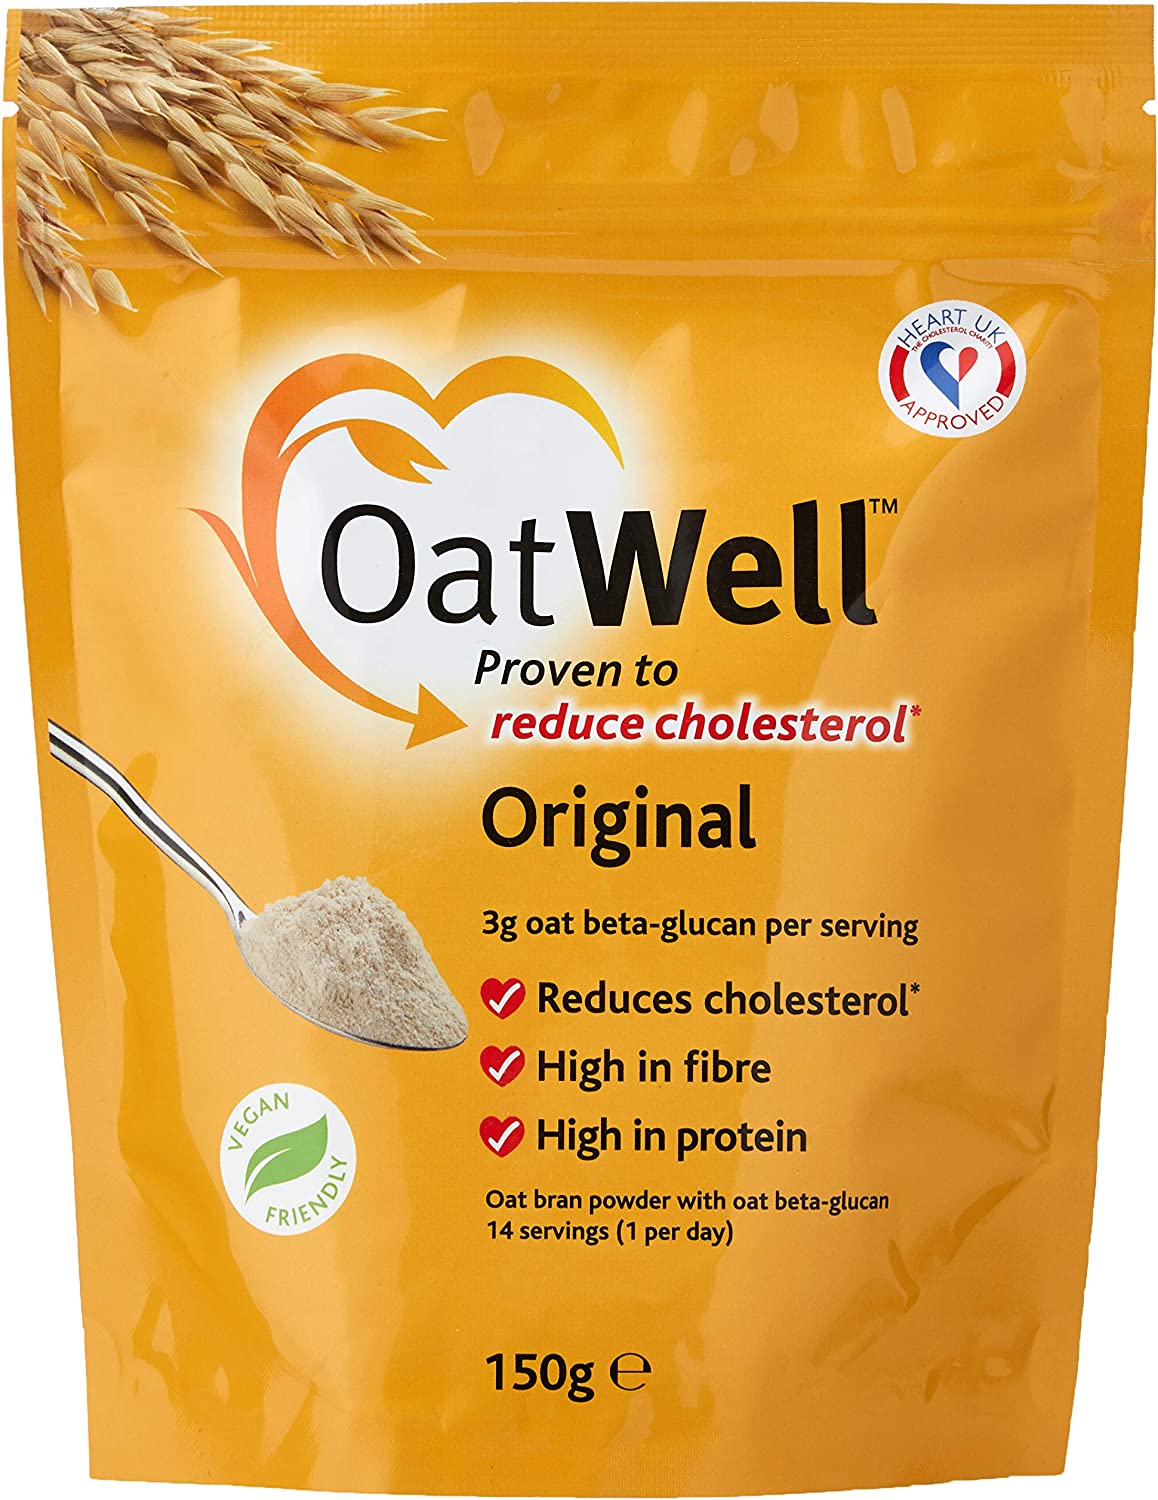 OatWell Original Oat Bran Powder